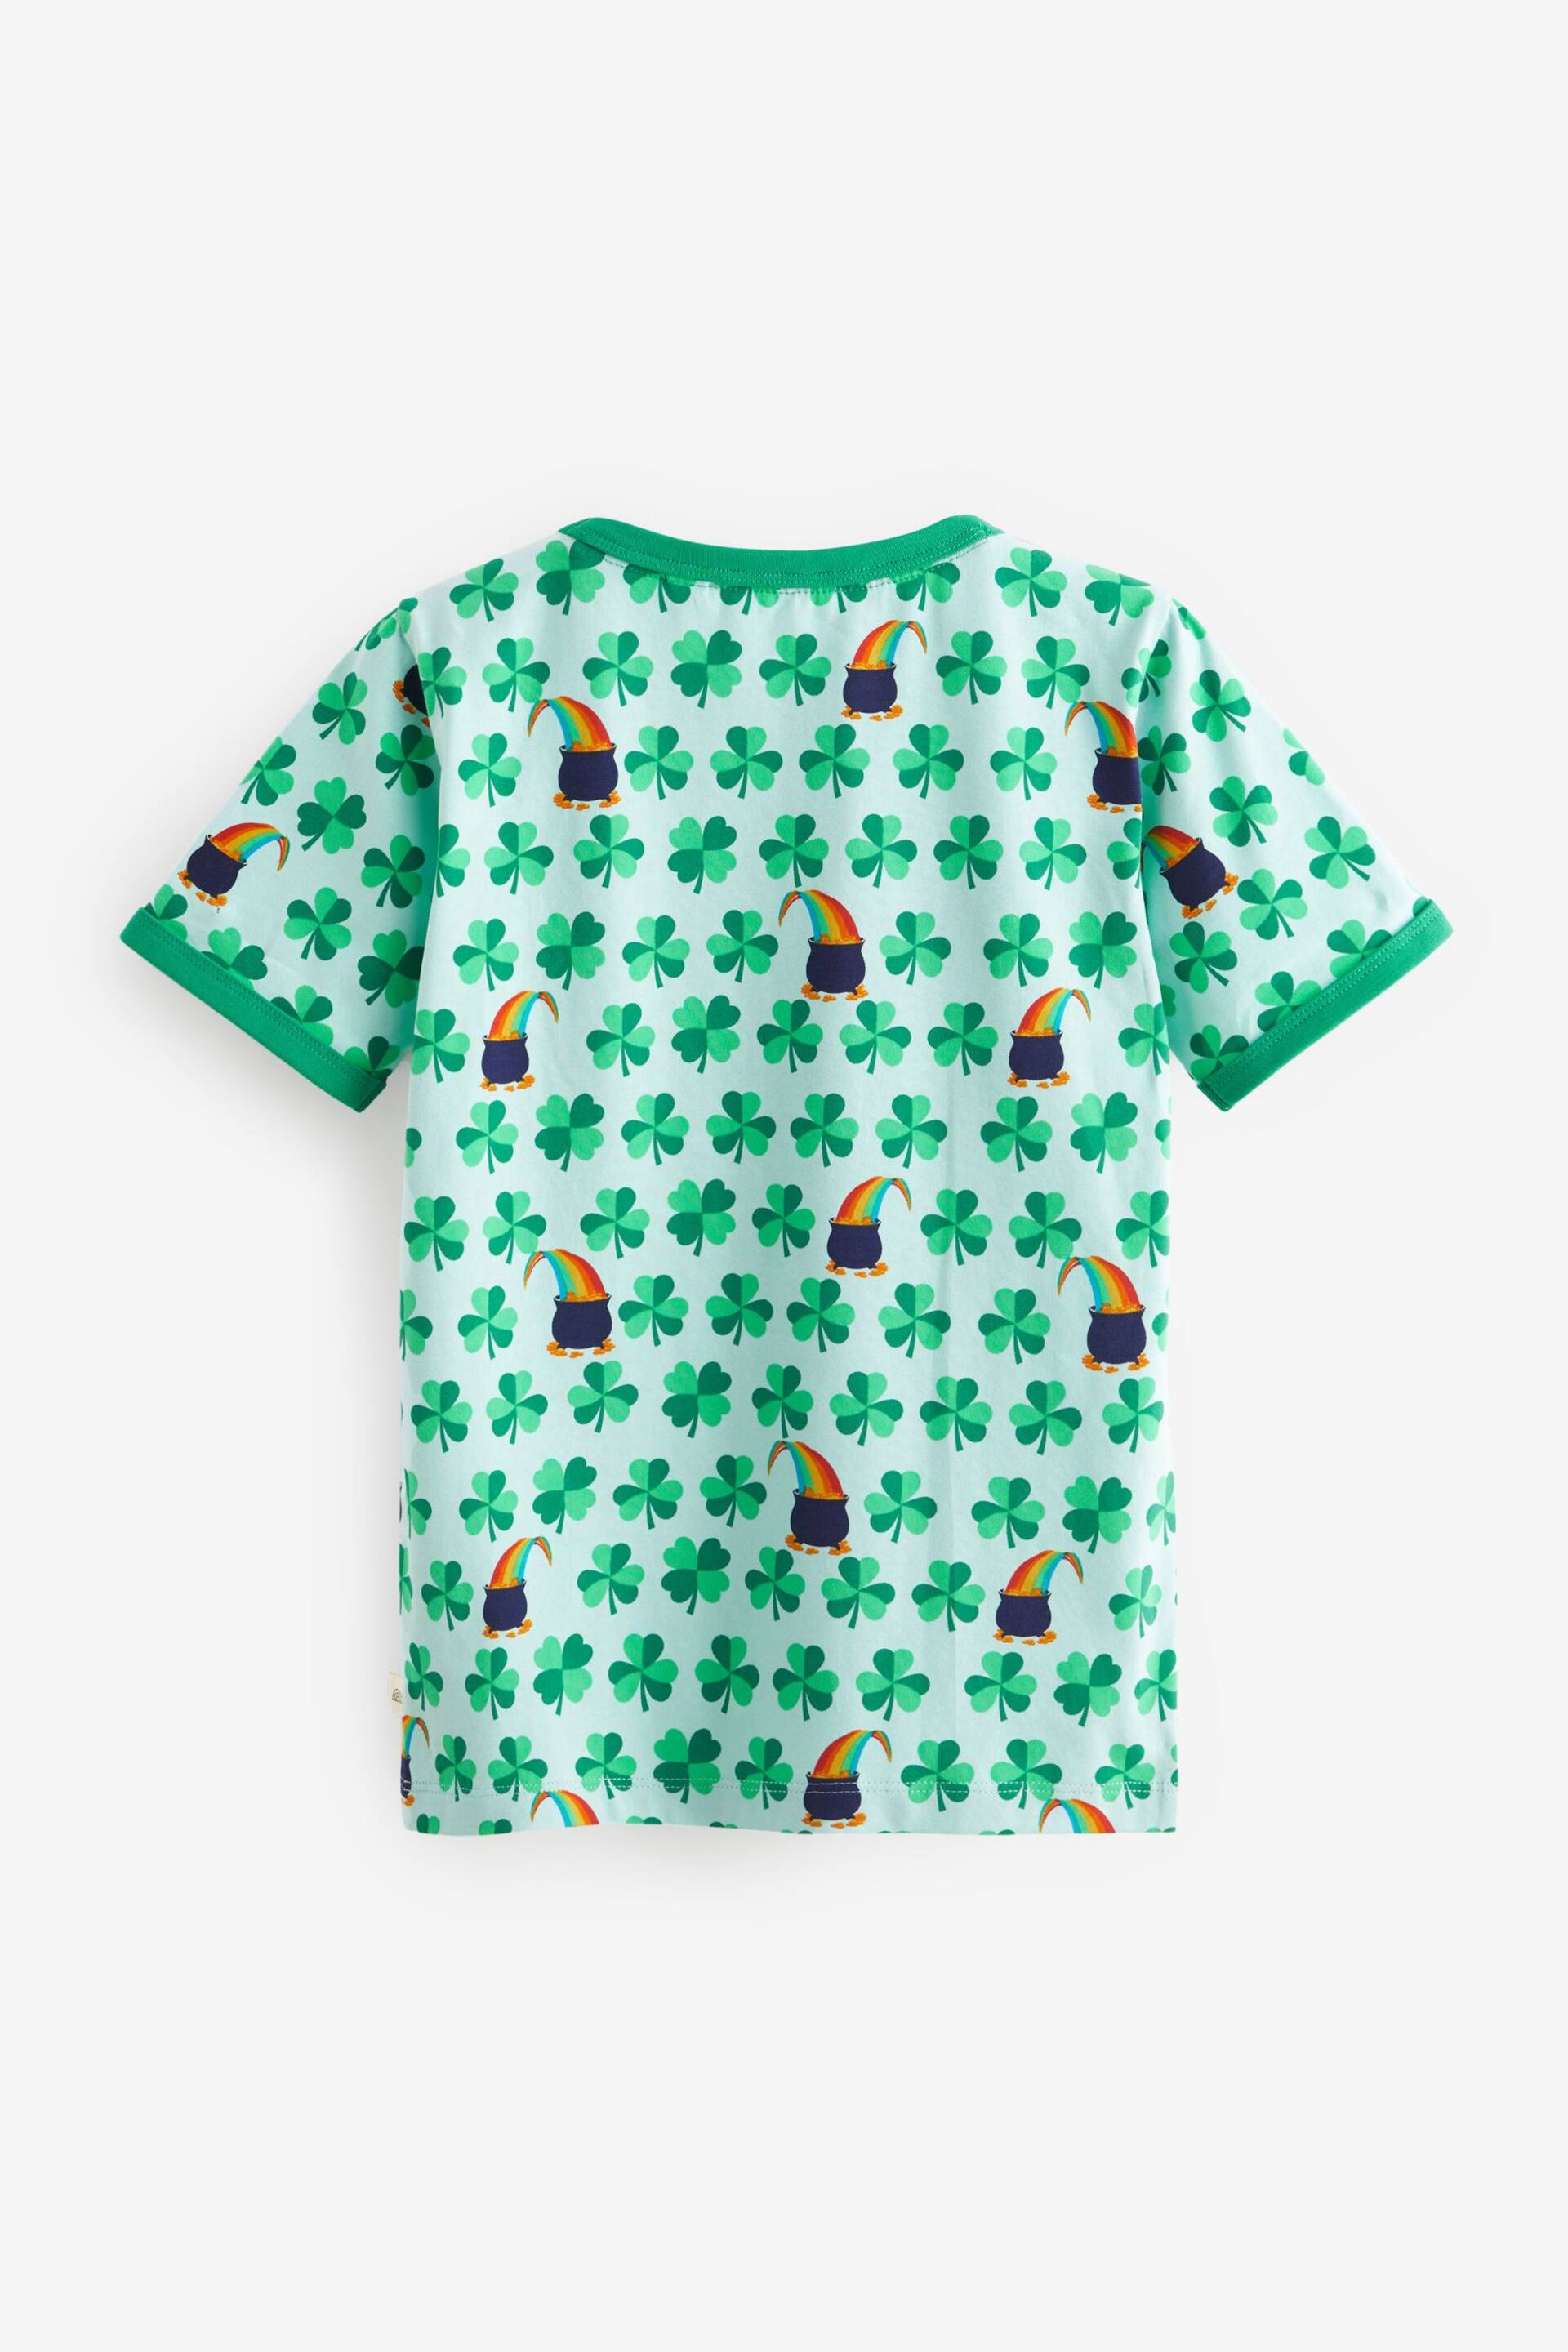 Little Bird by Jools Oliver Green Short Sleeve Raglan Super Lucky T-Shirt - Image 4 of 6